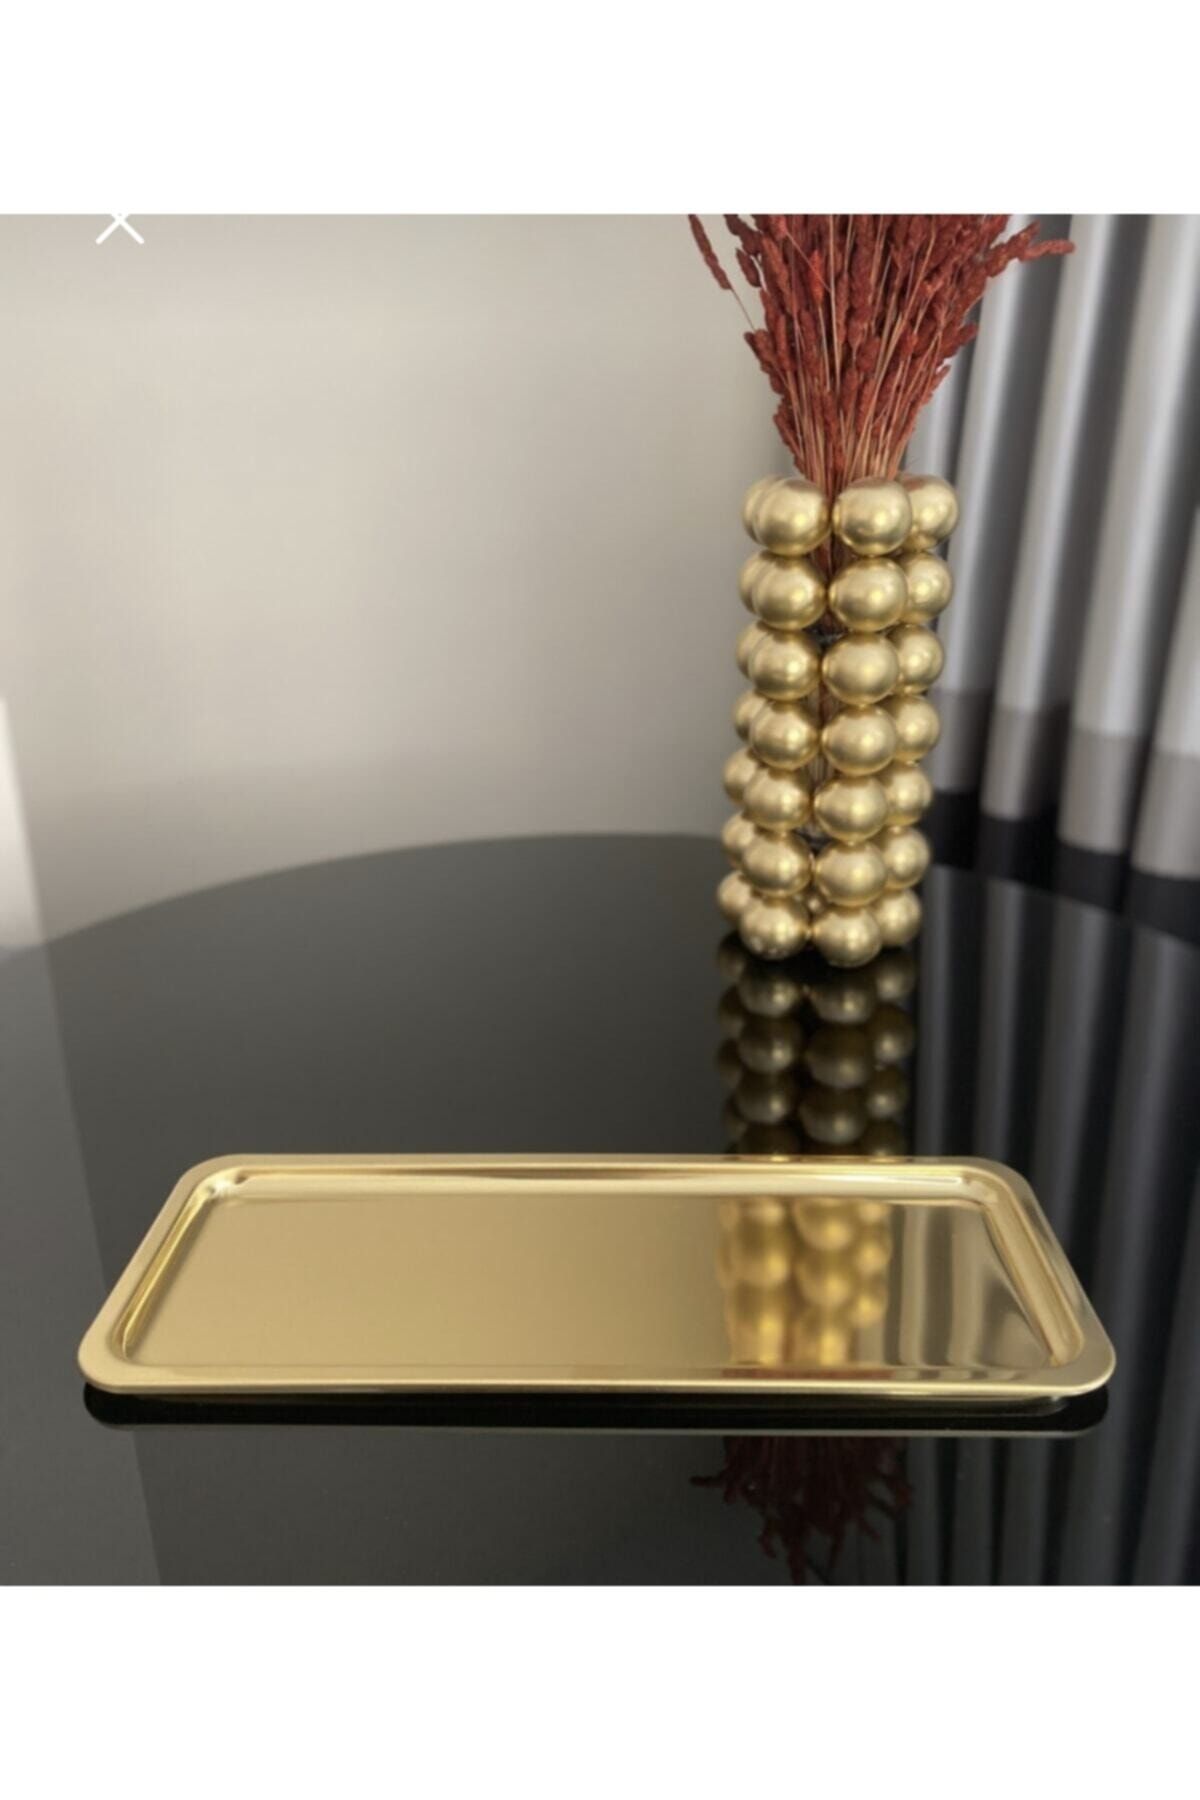 Abant Dikdörtgen Gold Altın Renk Kahve Pasta Servis Sunum Tepsisi 1 Adet(33x18cm)